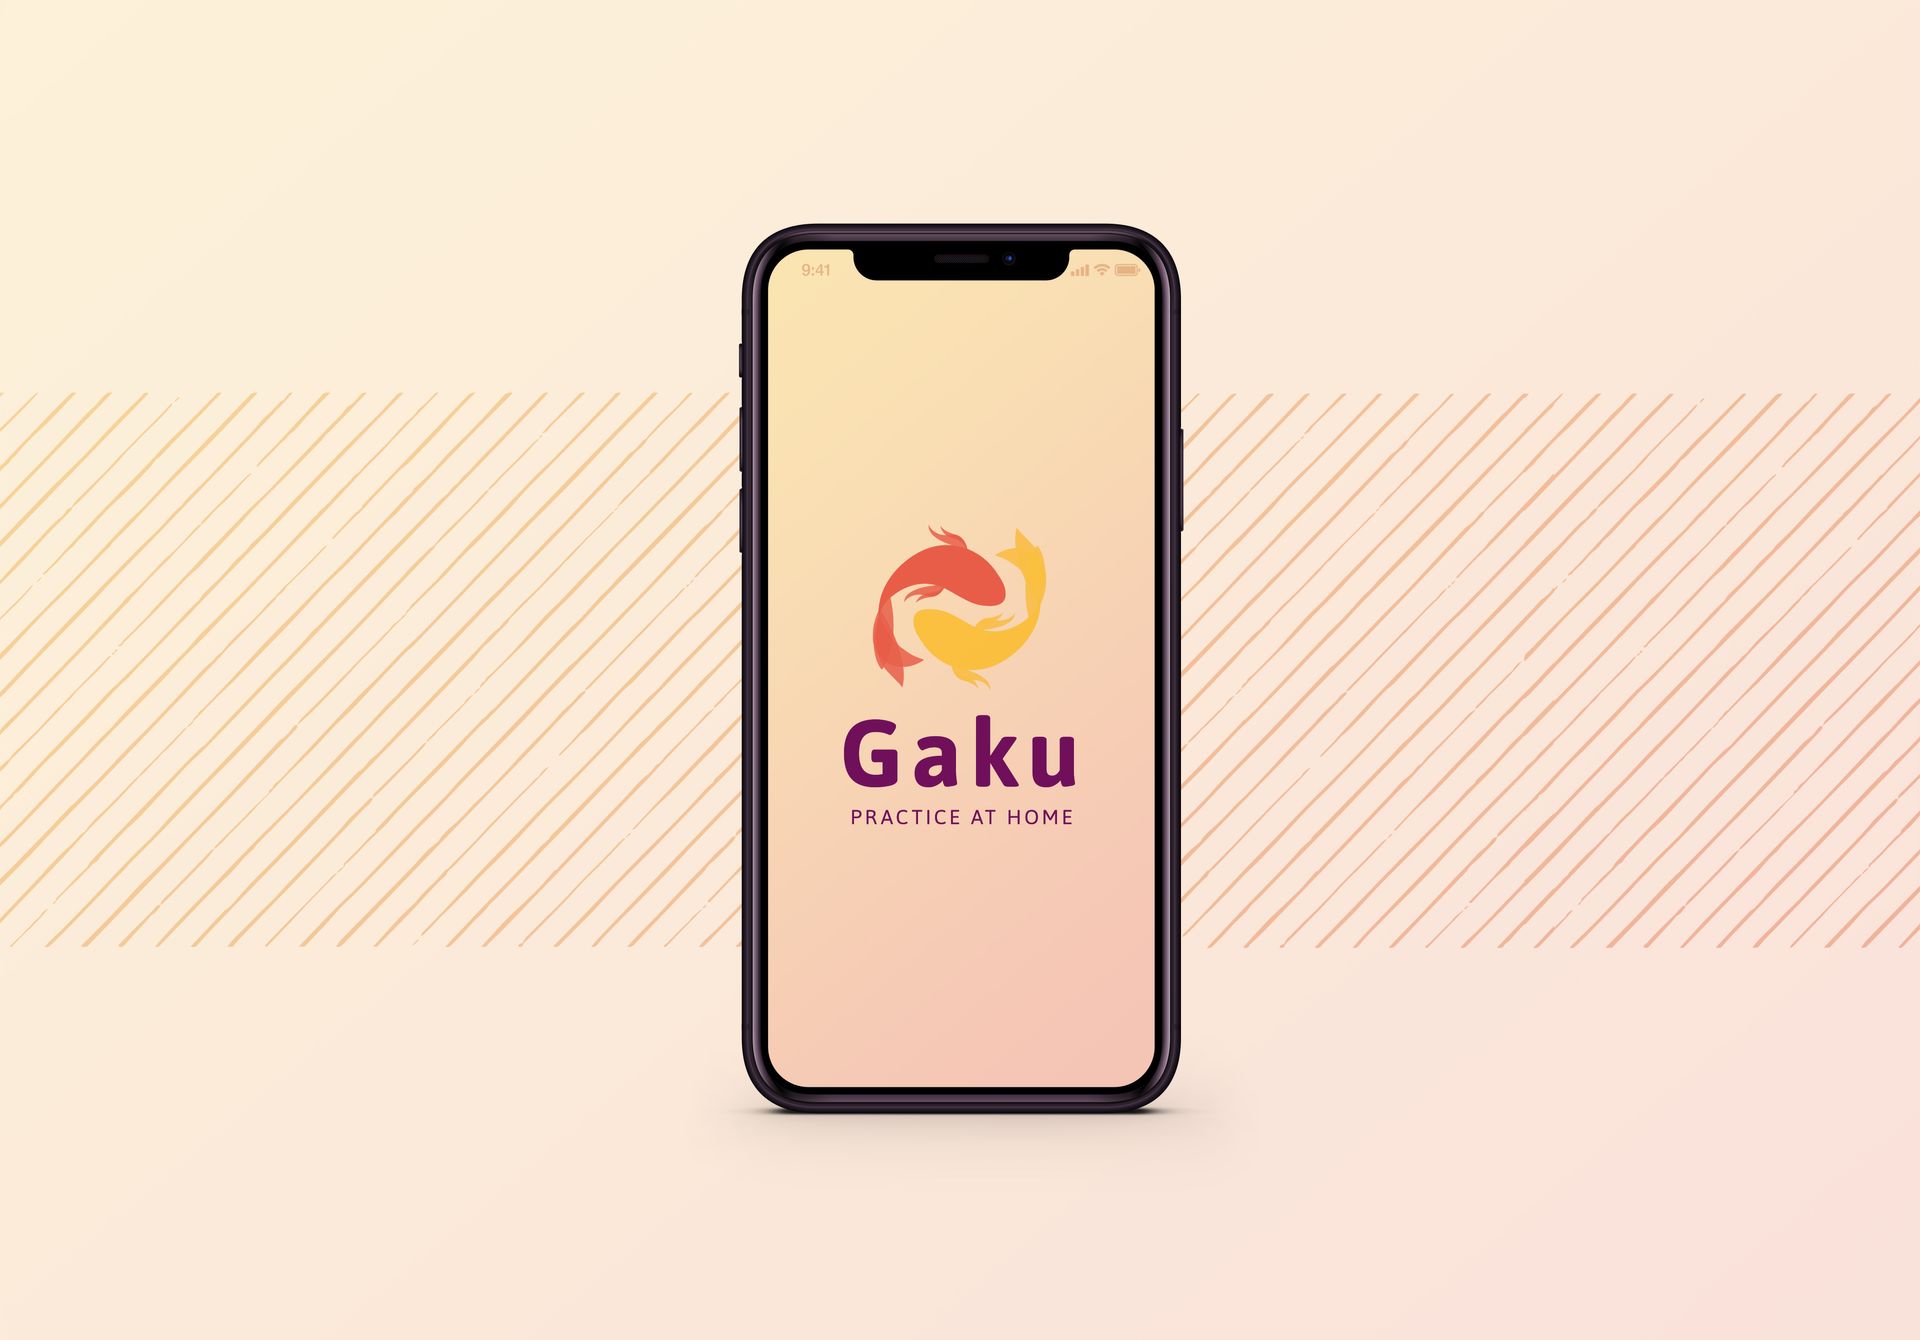 Gaku logo on an iPhone